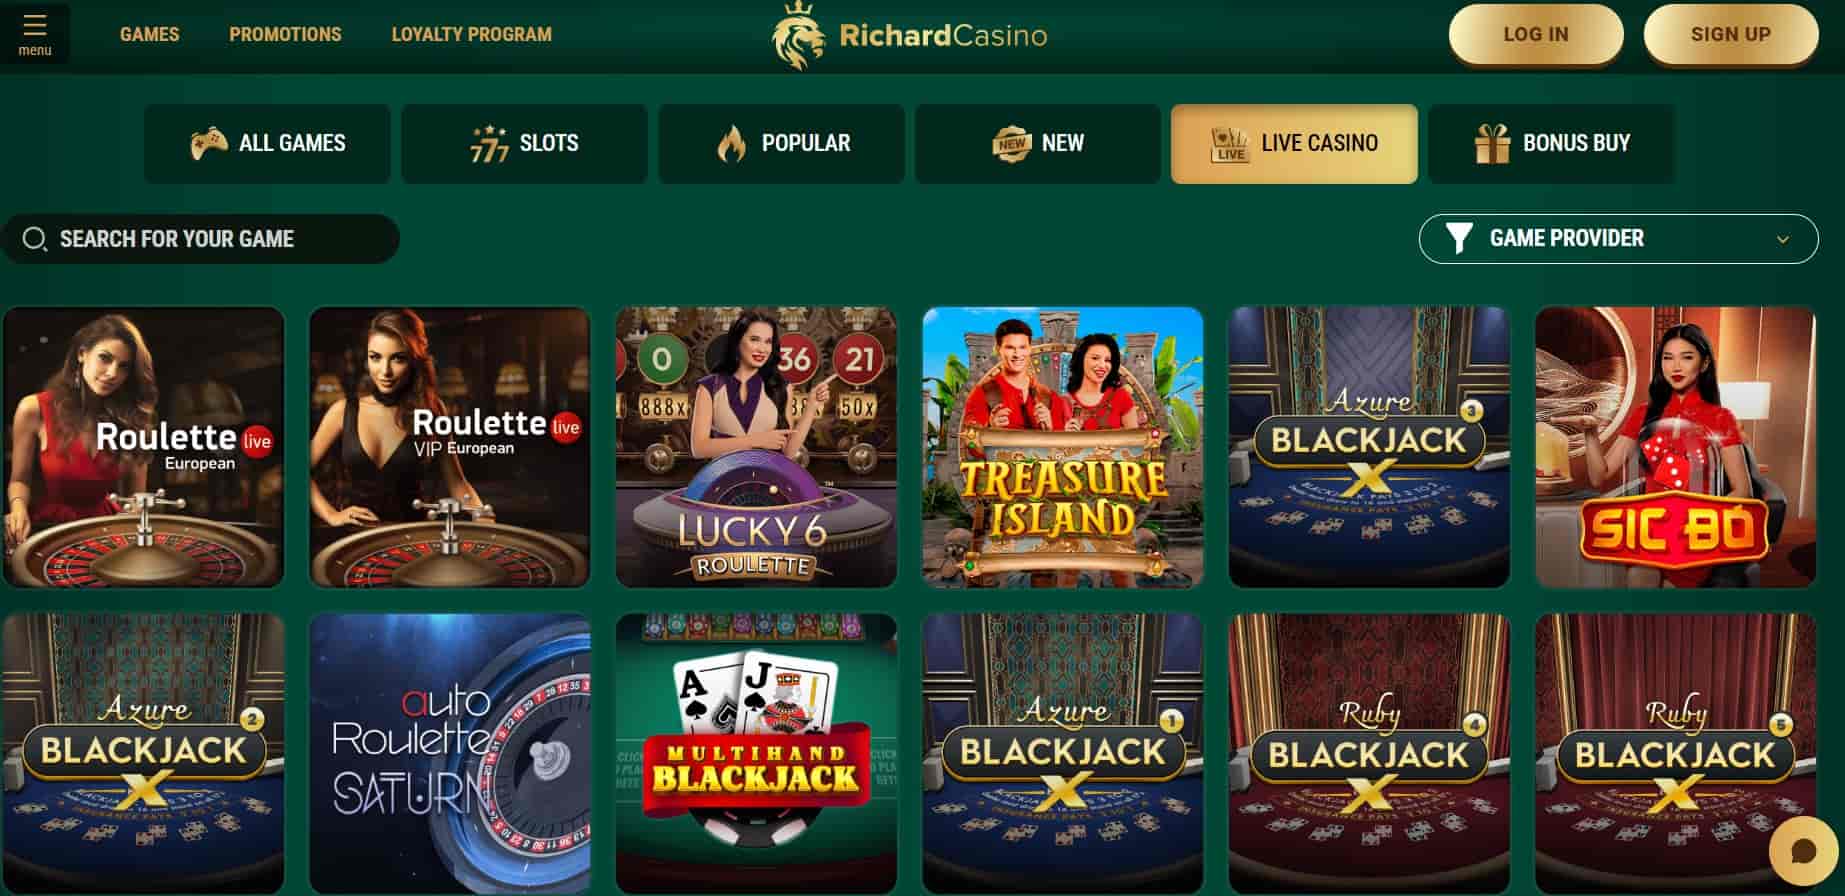 richard casino live casino